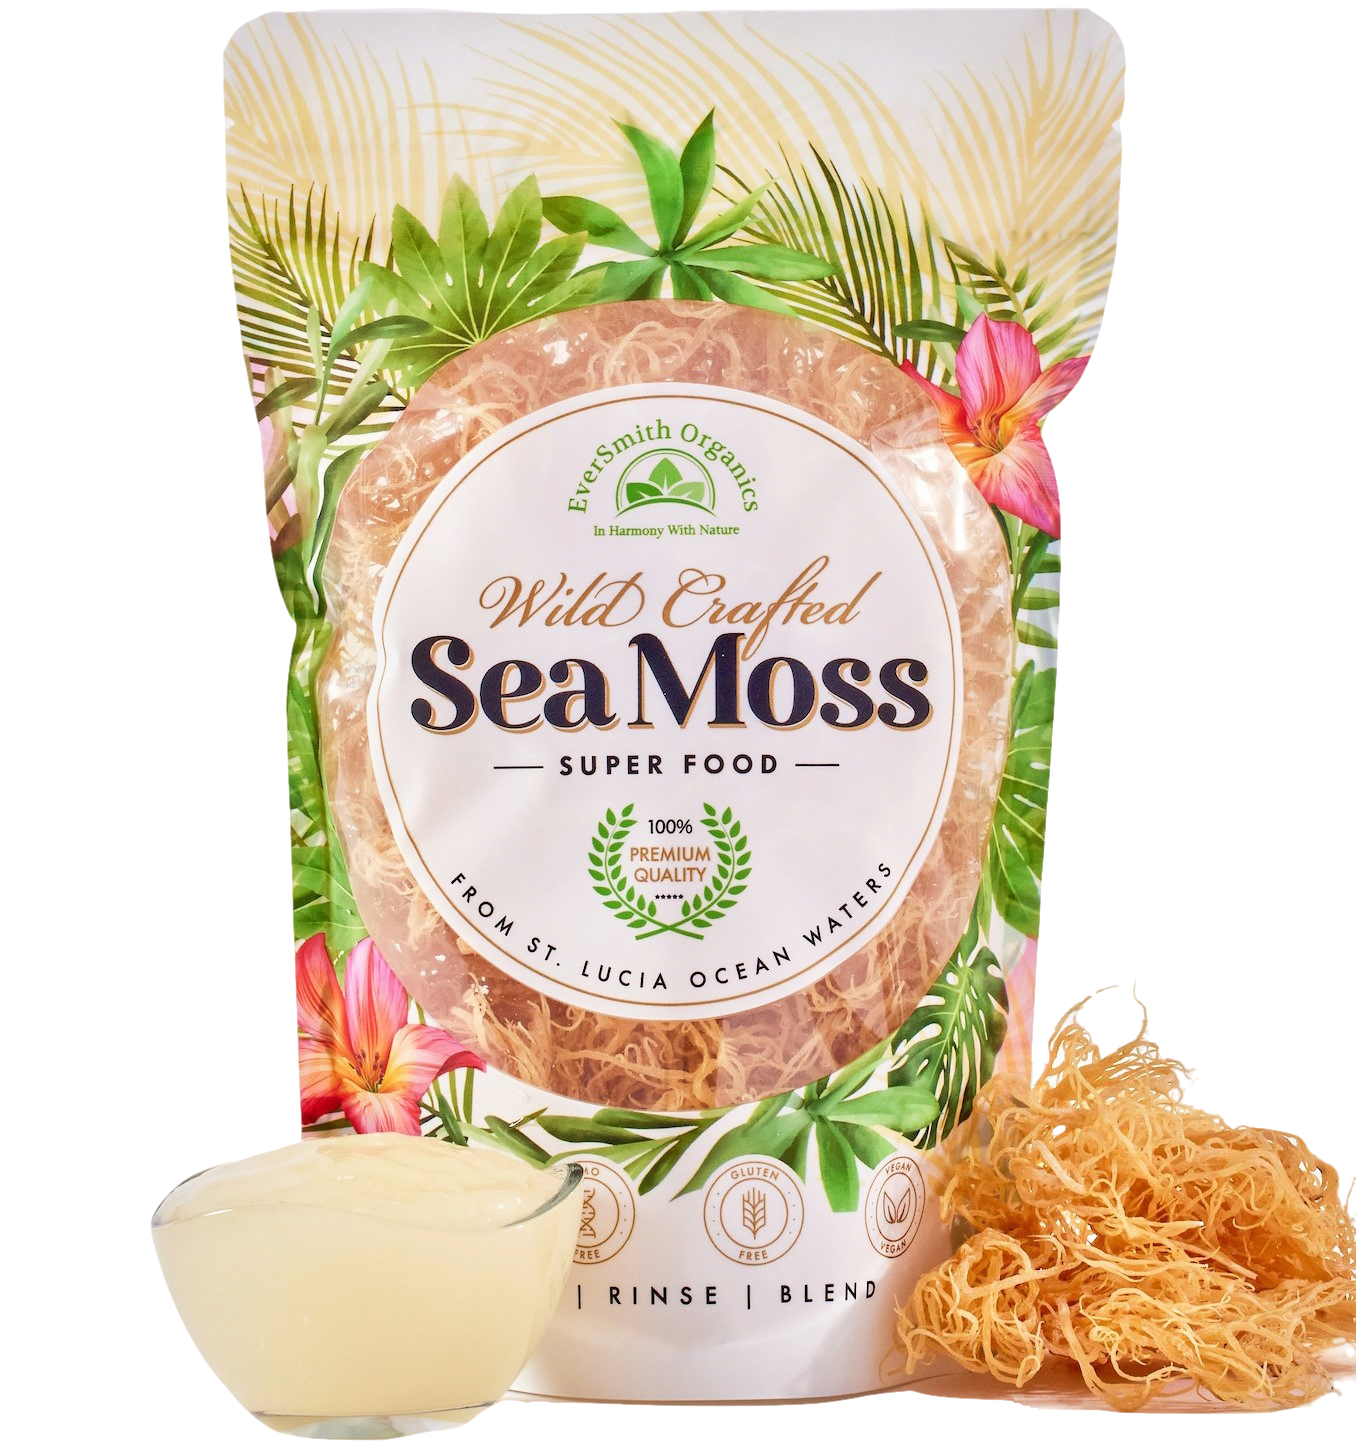 Irish Sea Moss, Raw Wildcrafted